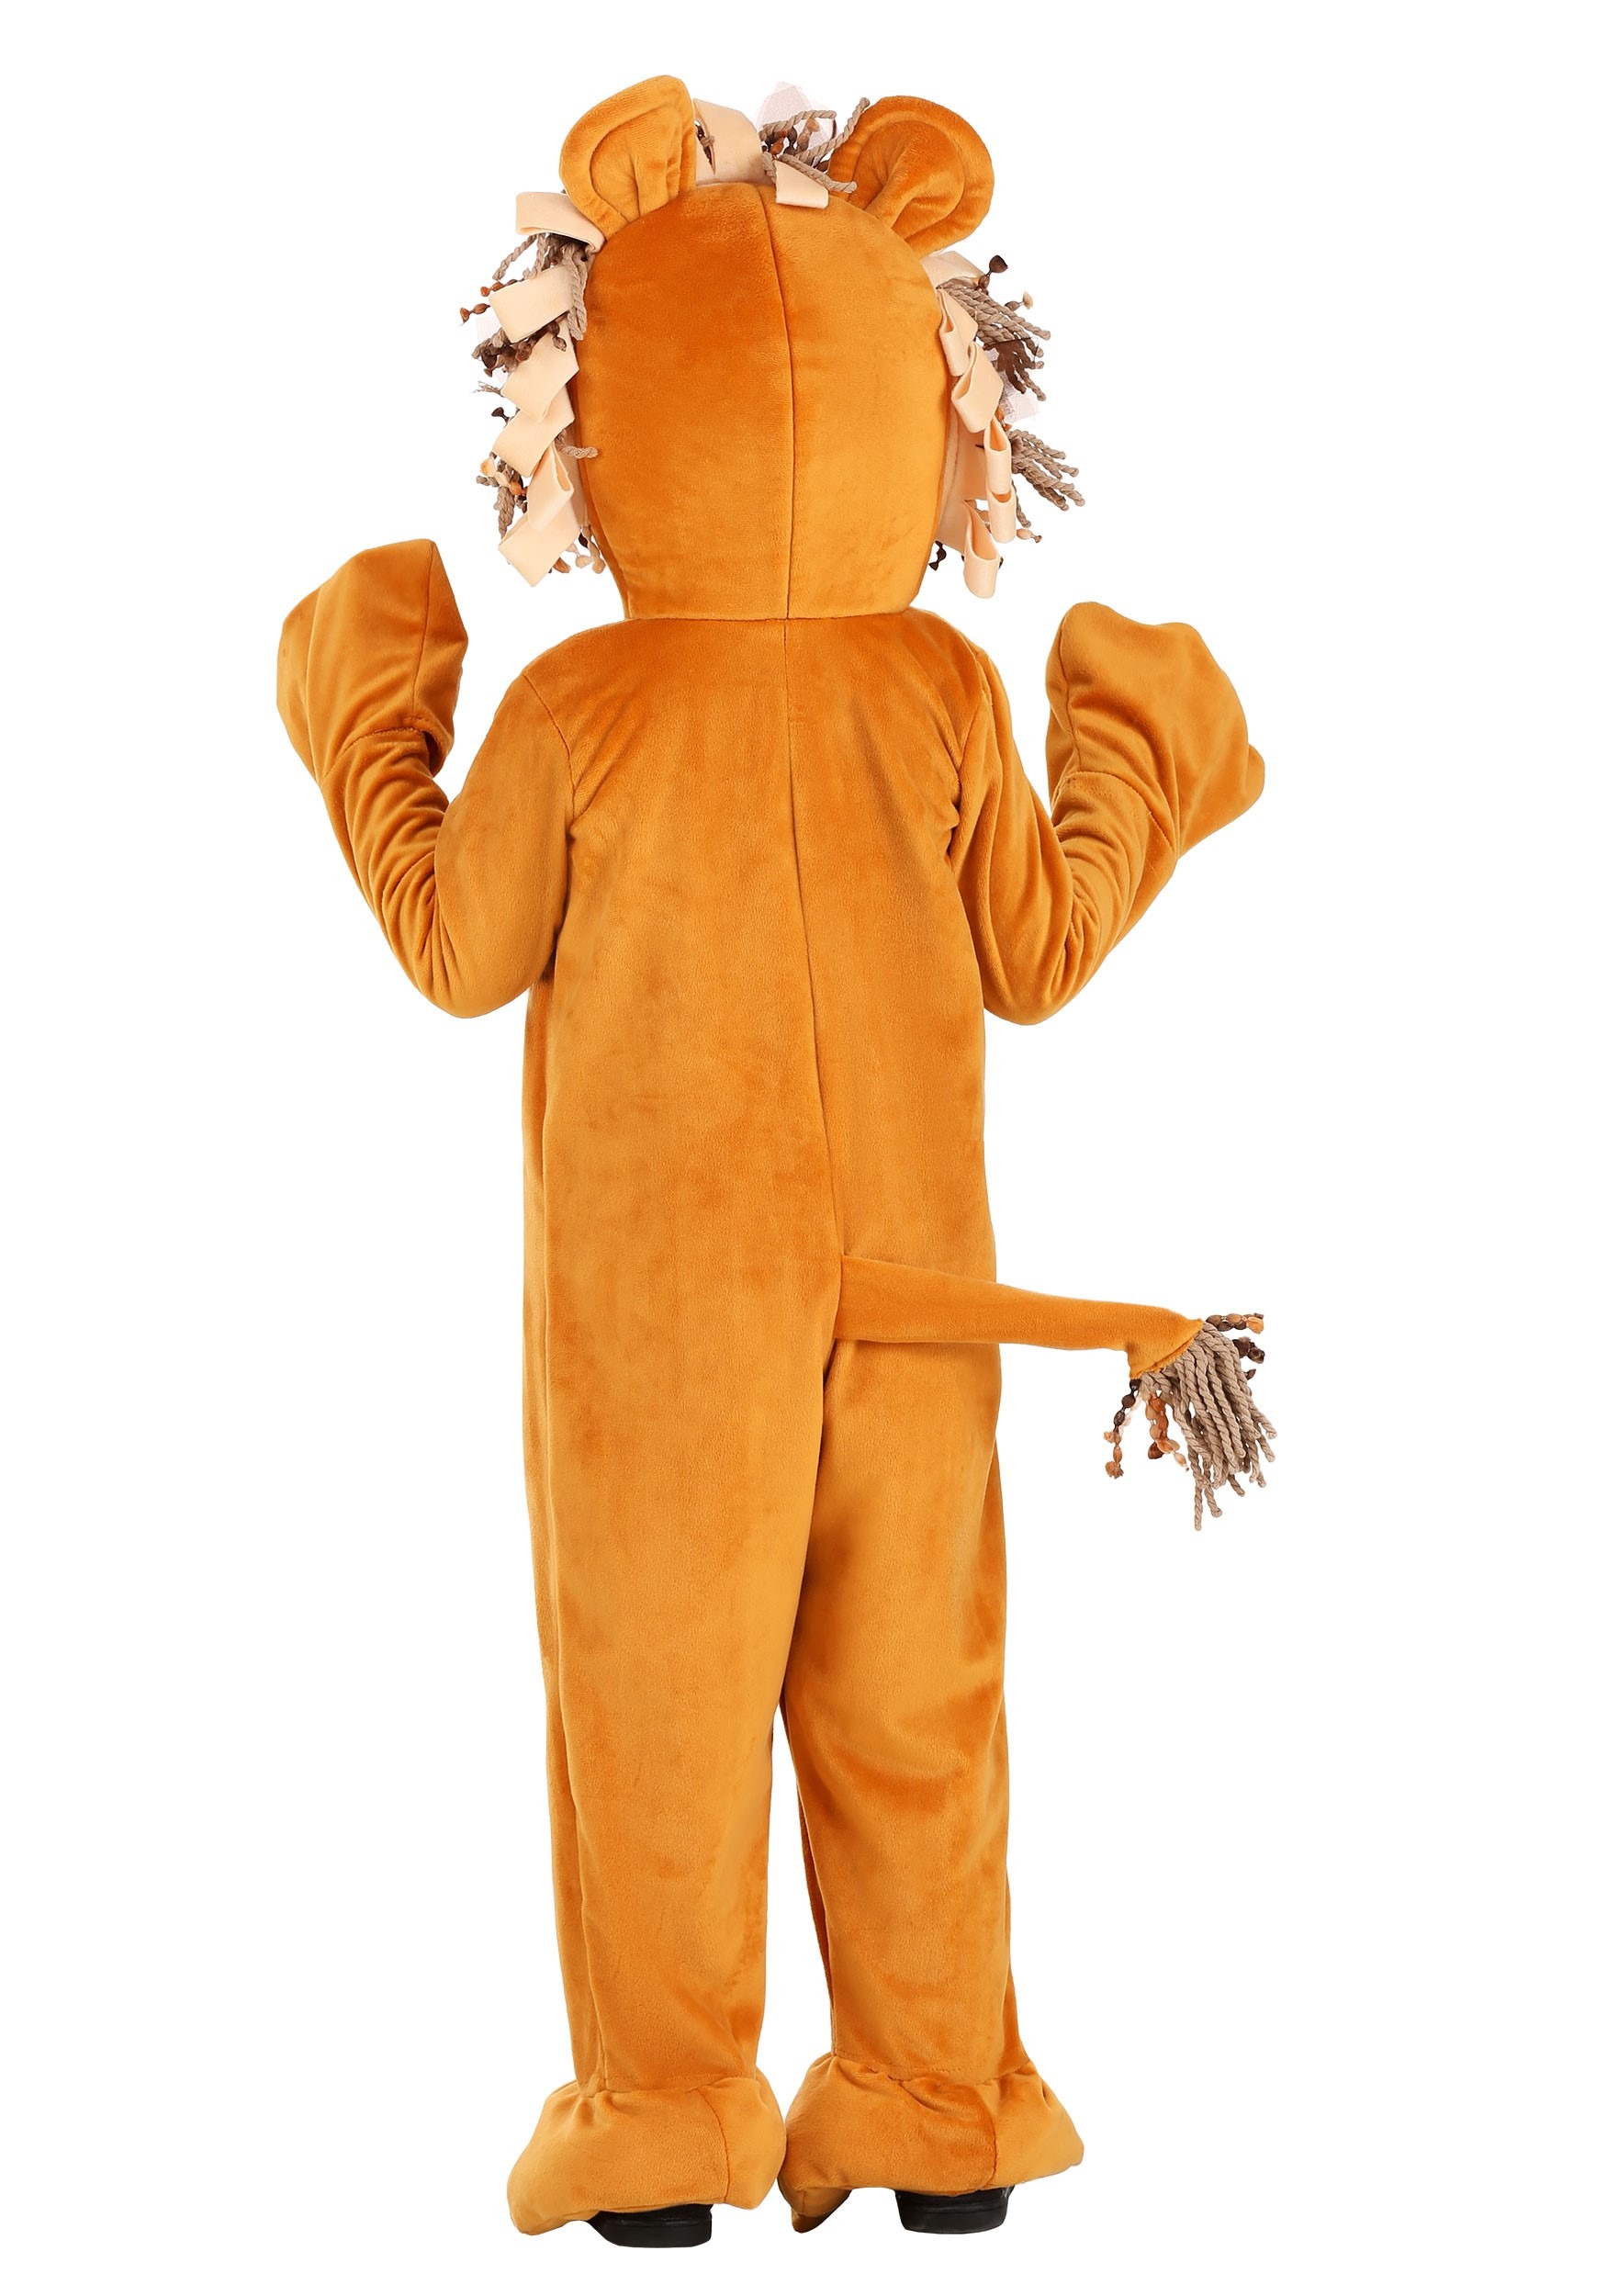 Roaring Lion Toddler Costume